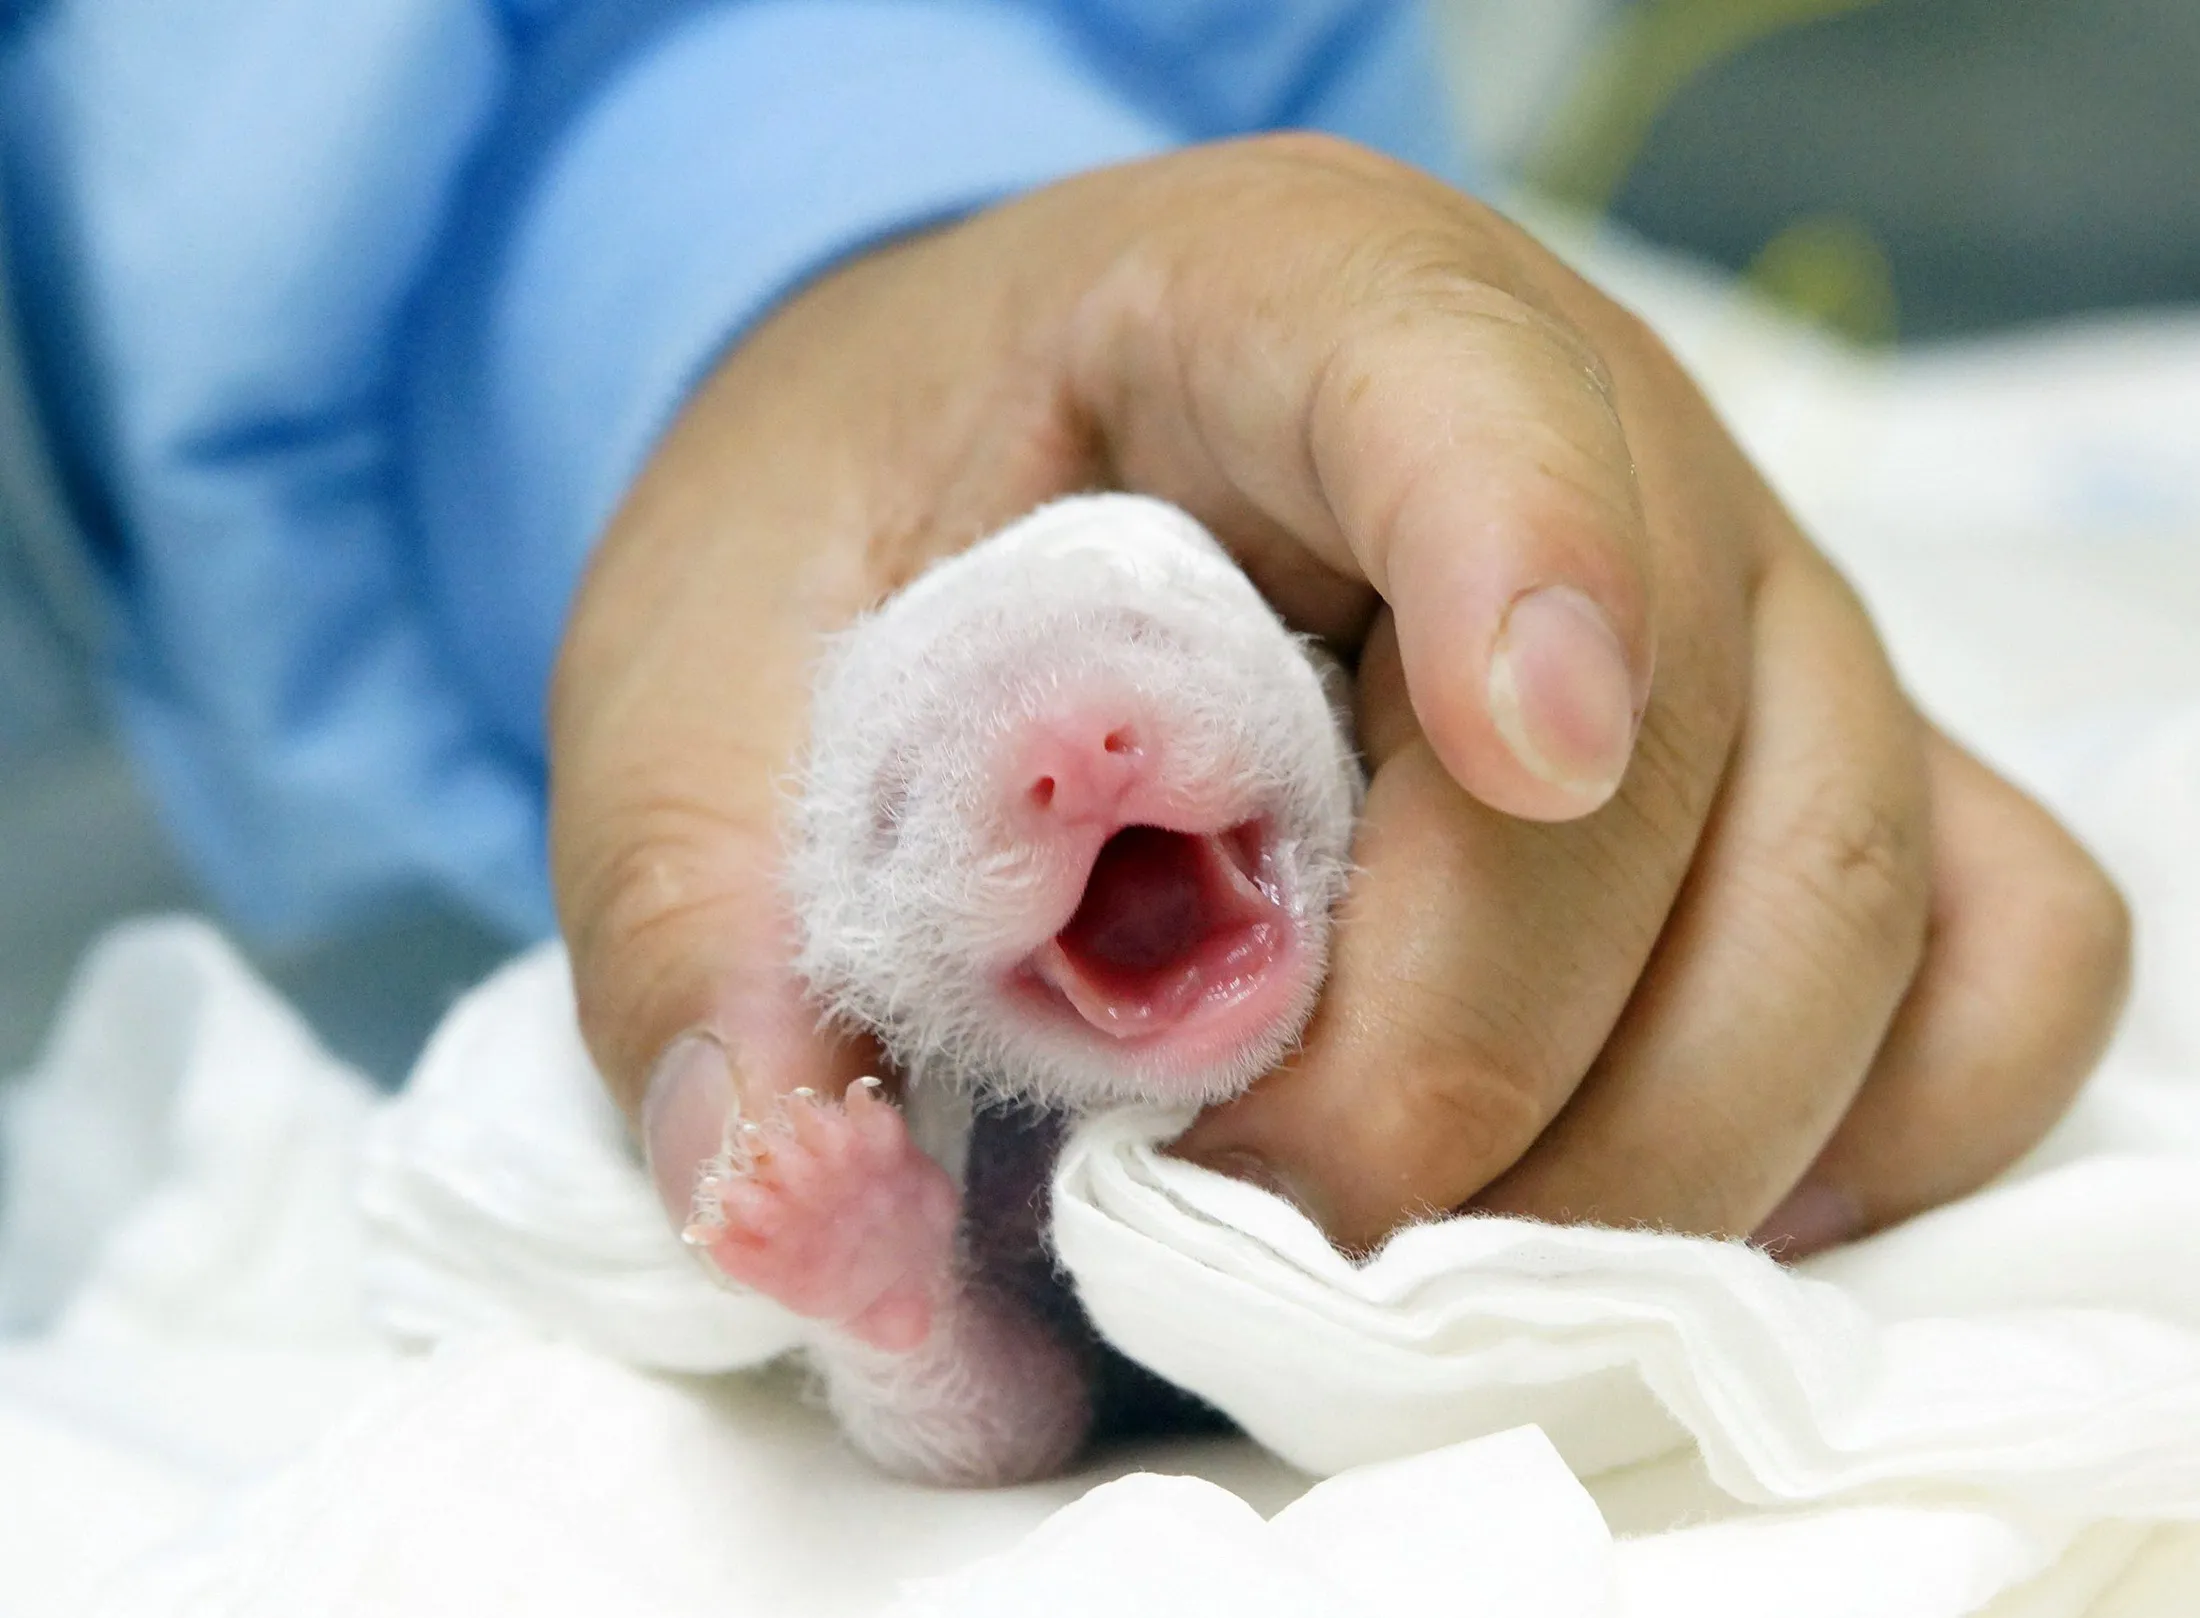 Панда сколько детенышей. Детёныш панды новорожденный. Новорождённый денетыш панды. Новорожденный Медвежонок панды. Детёныши панды Новорожденные.